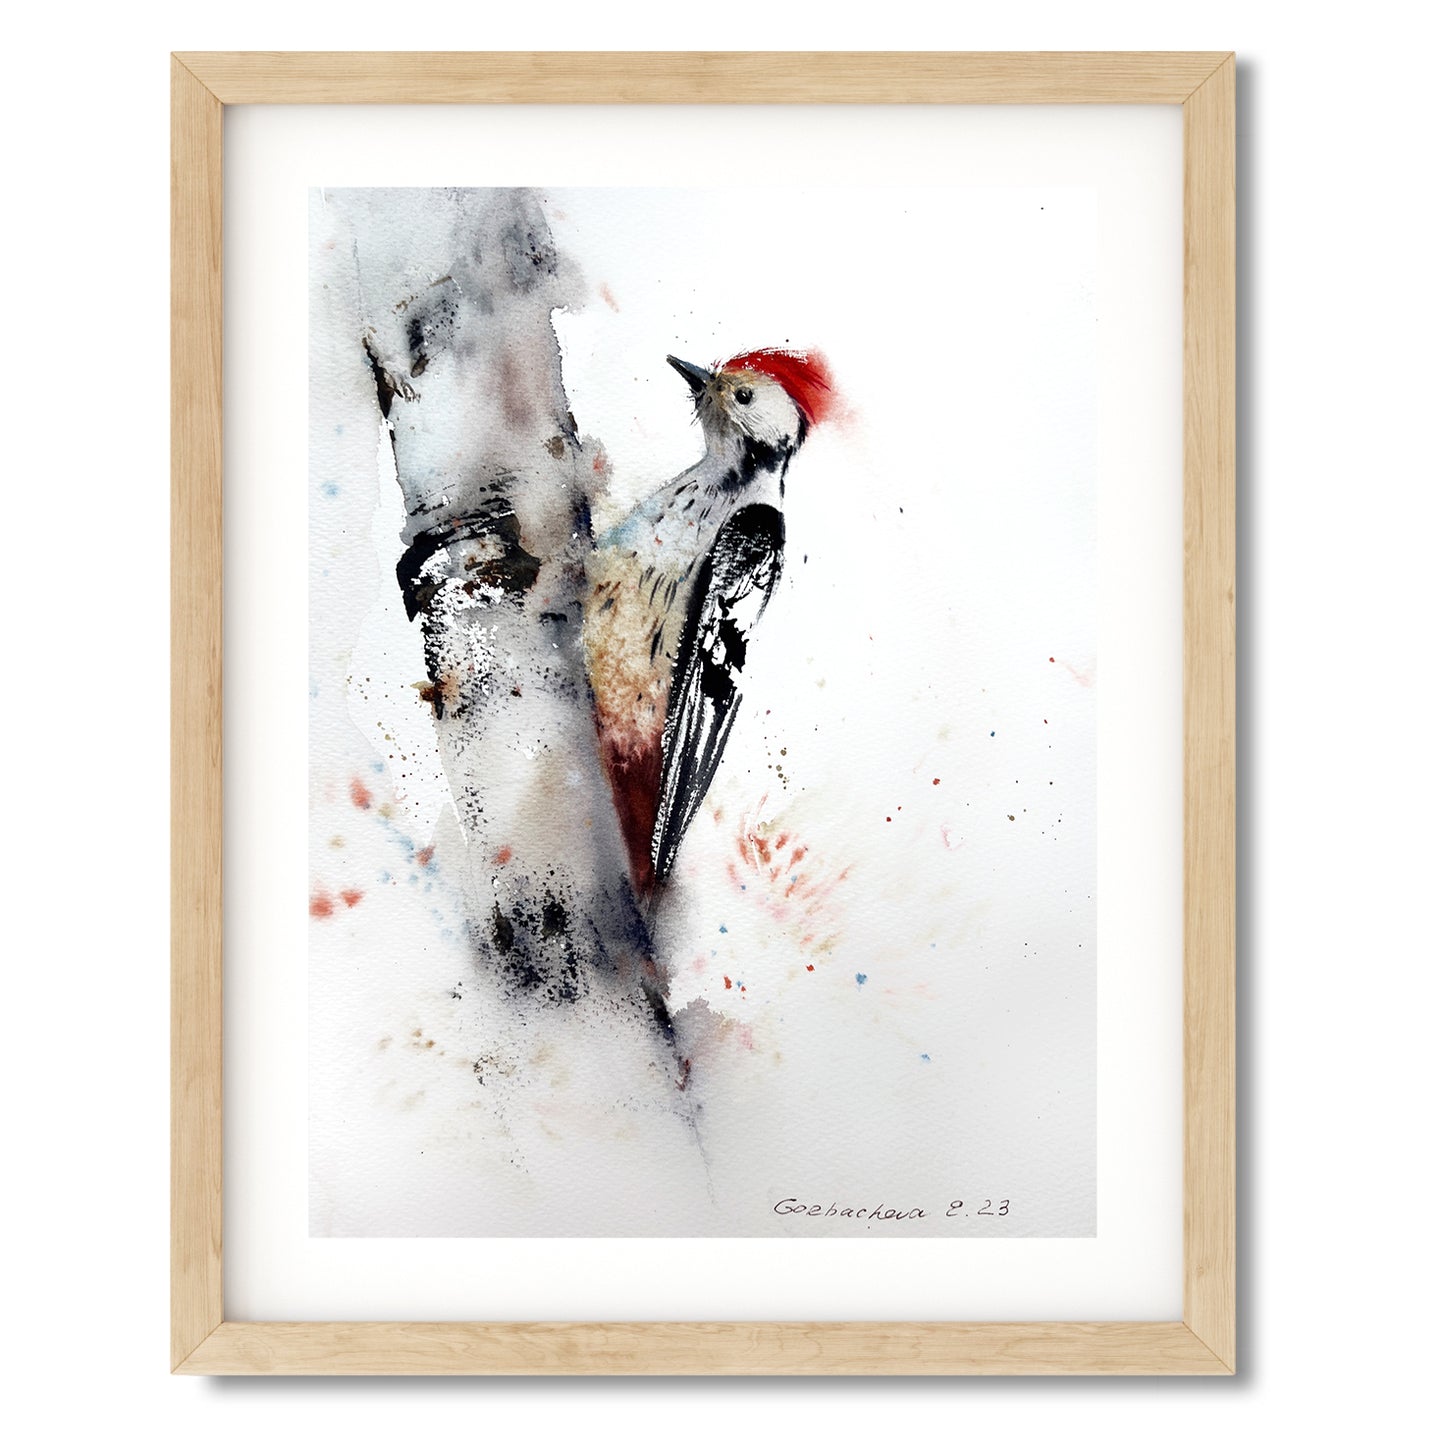 Woodpecker Watercolor Original Painting, Small Artwork, Wildlife Illustration, Gift For Mom, Living Room Wall Decor